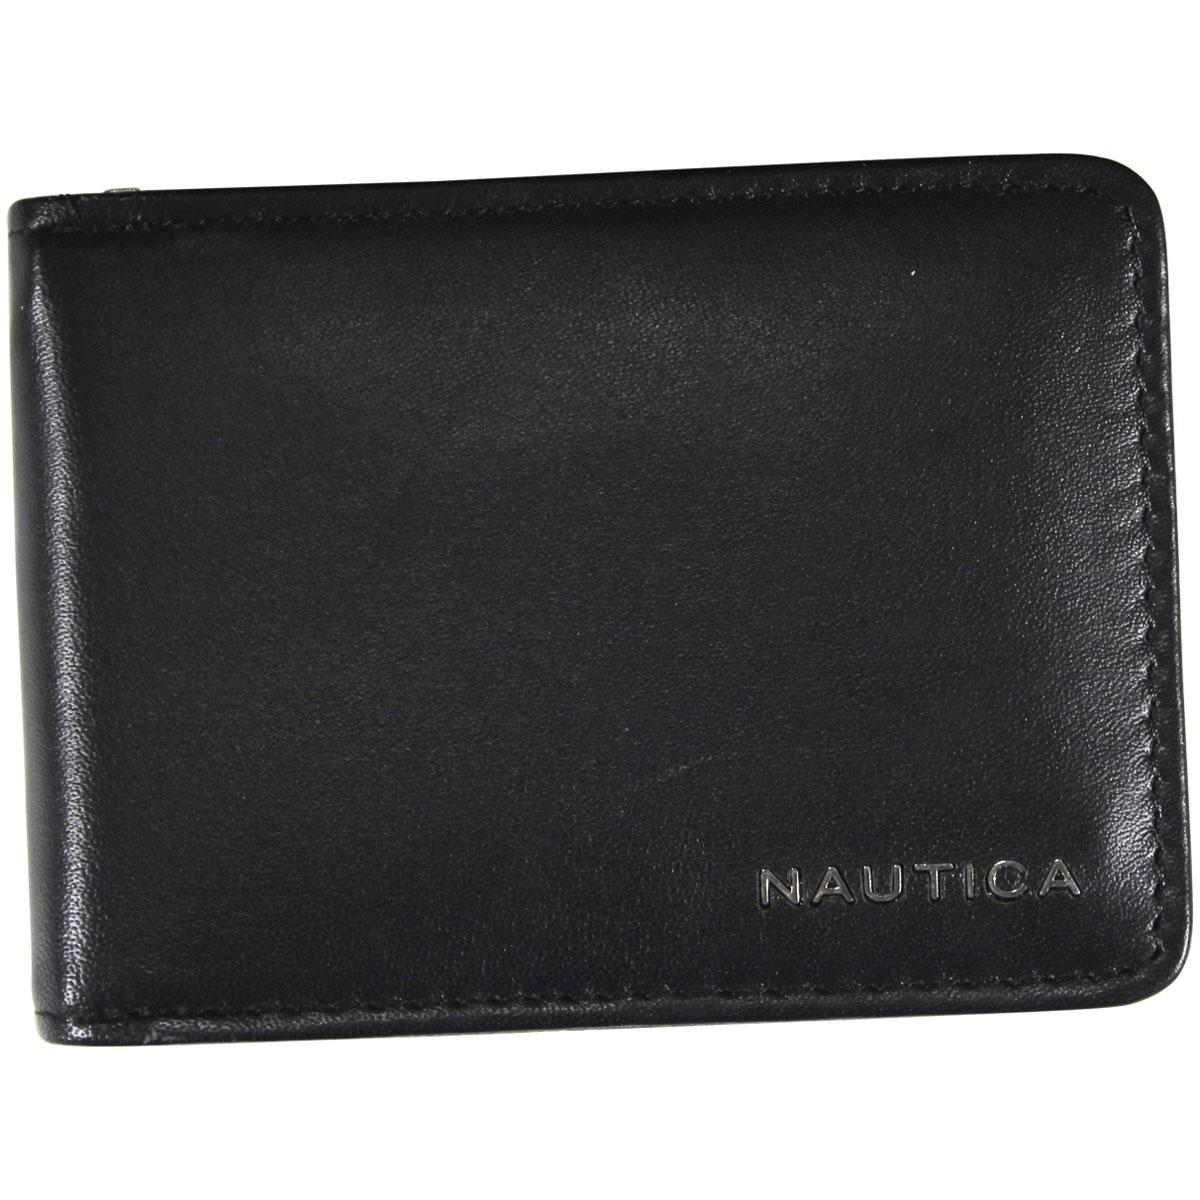 Nautica Men's Slim Zip Around Genuine Leather Wallet